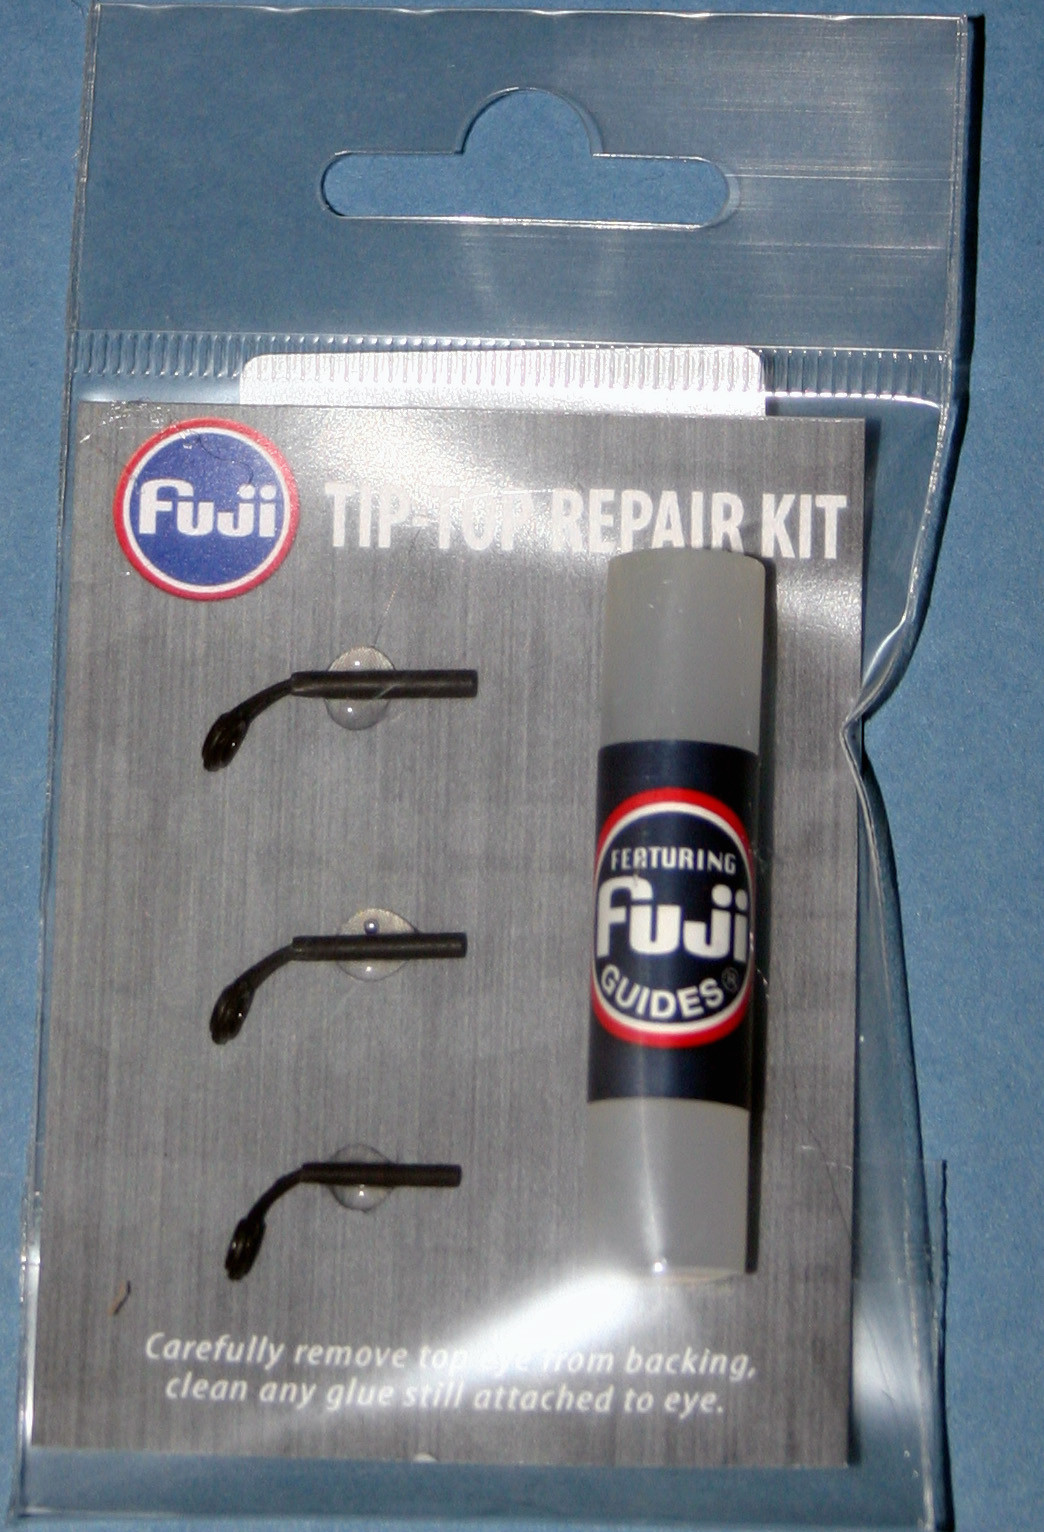 Tip Top Repair & spares packs - Rod Kits & Ring Sets - Kits